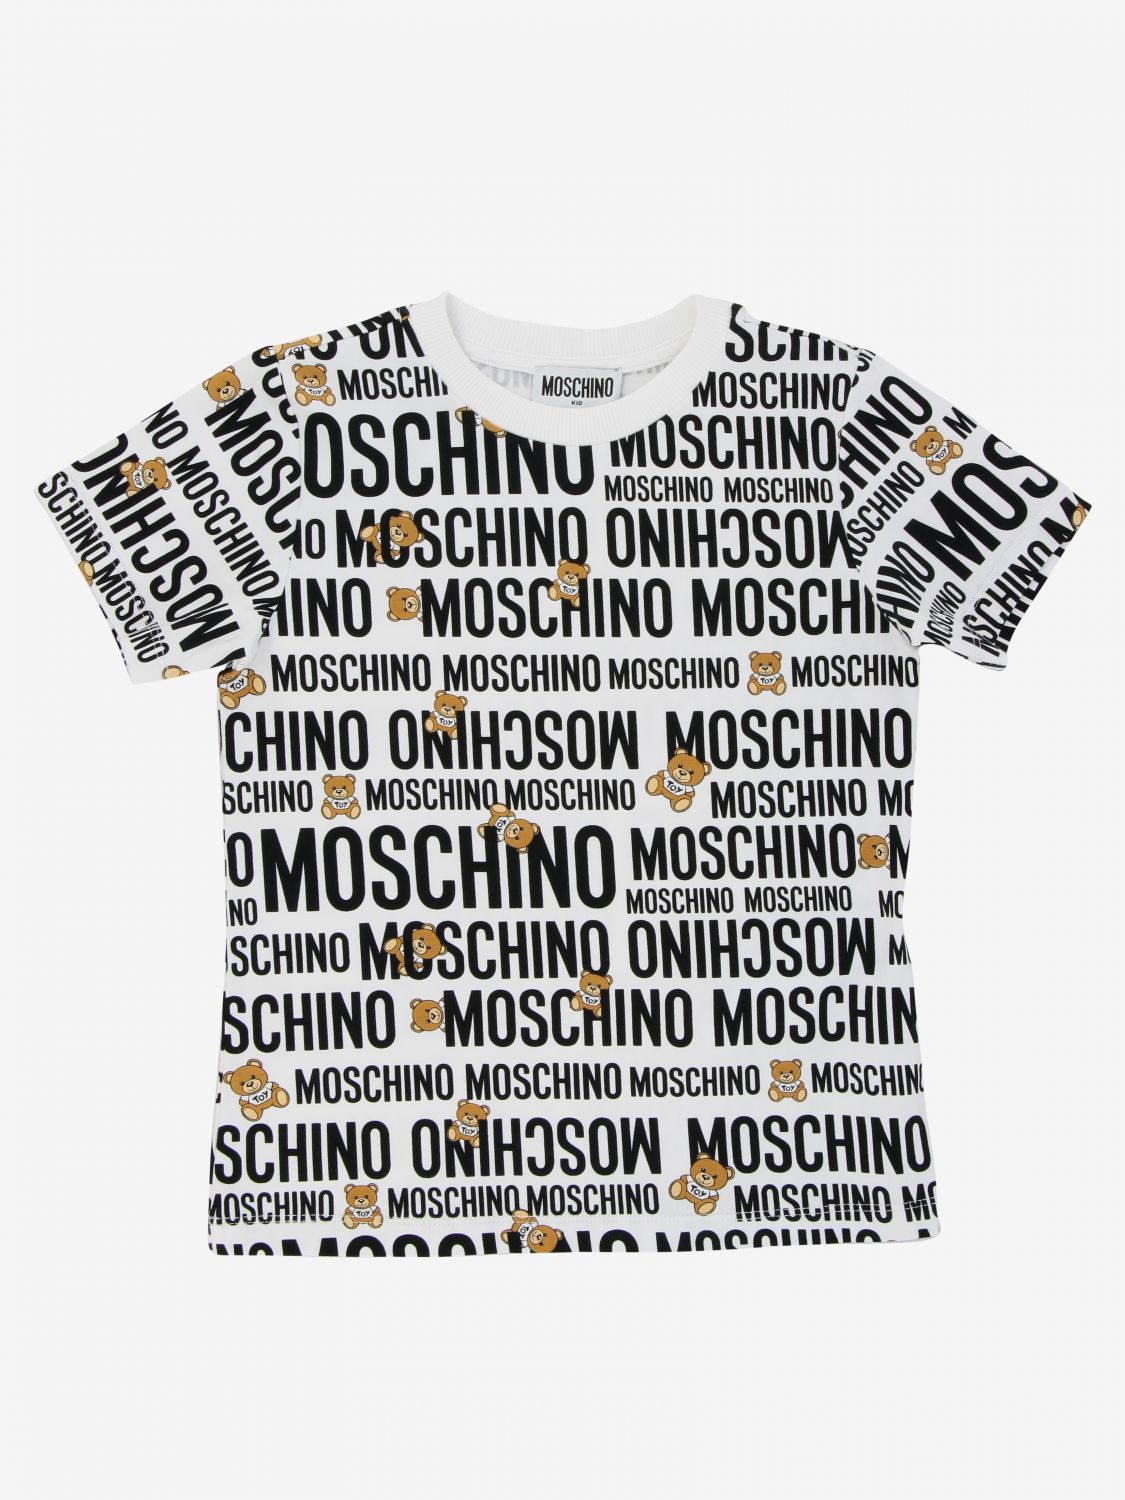 moschino all over print shirt